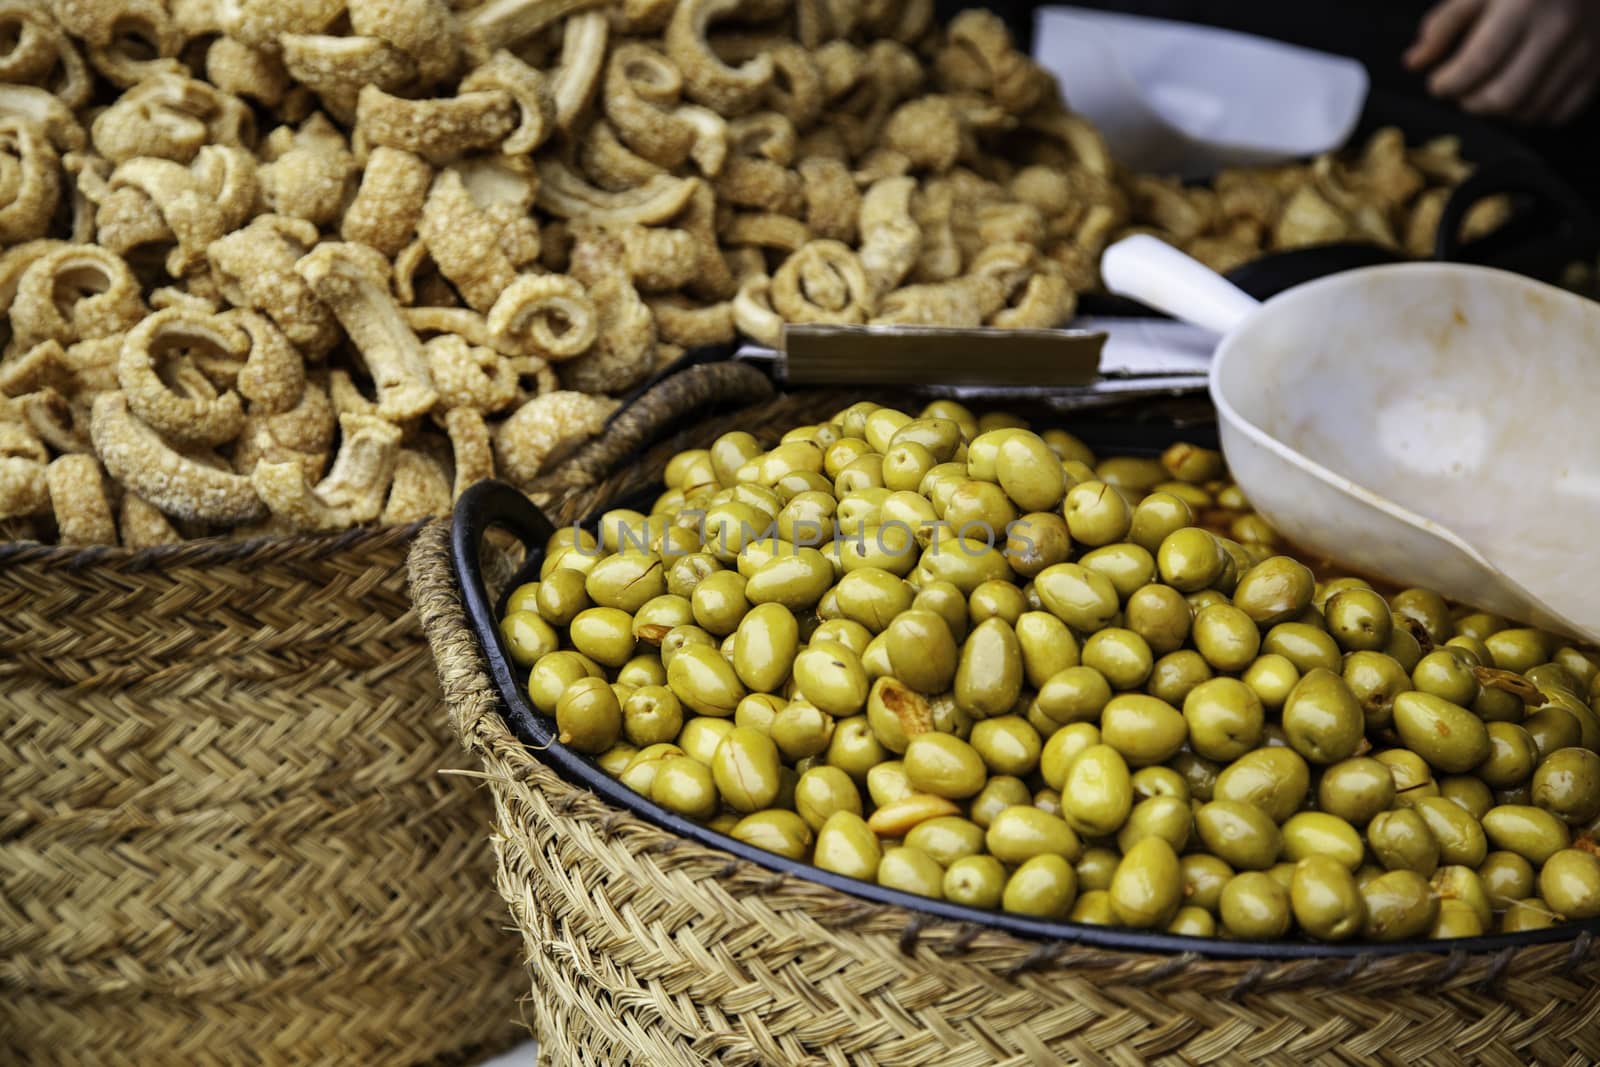 Olives in a market by esebene